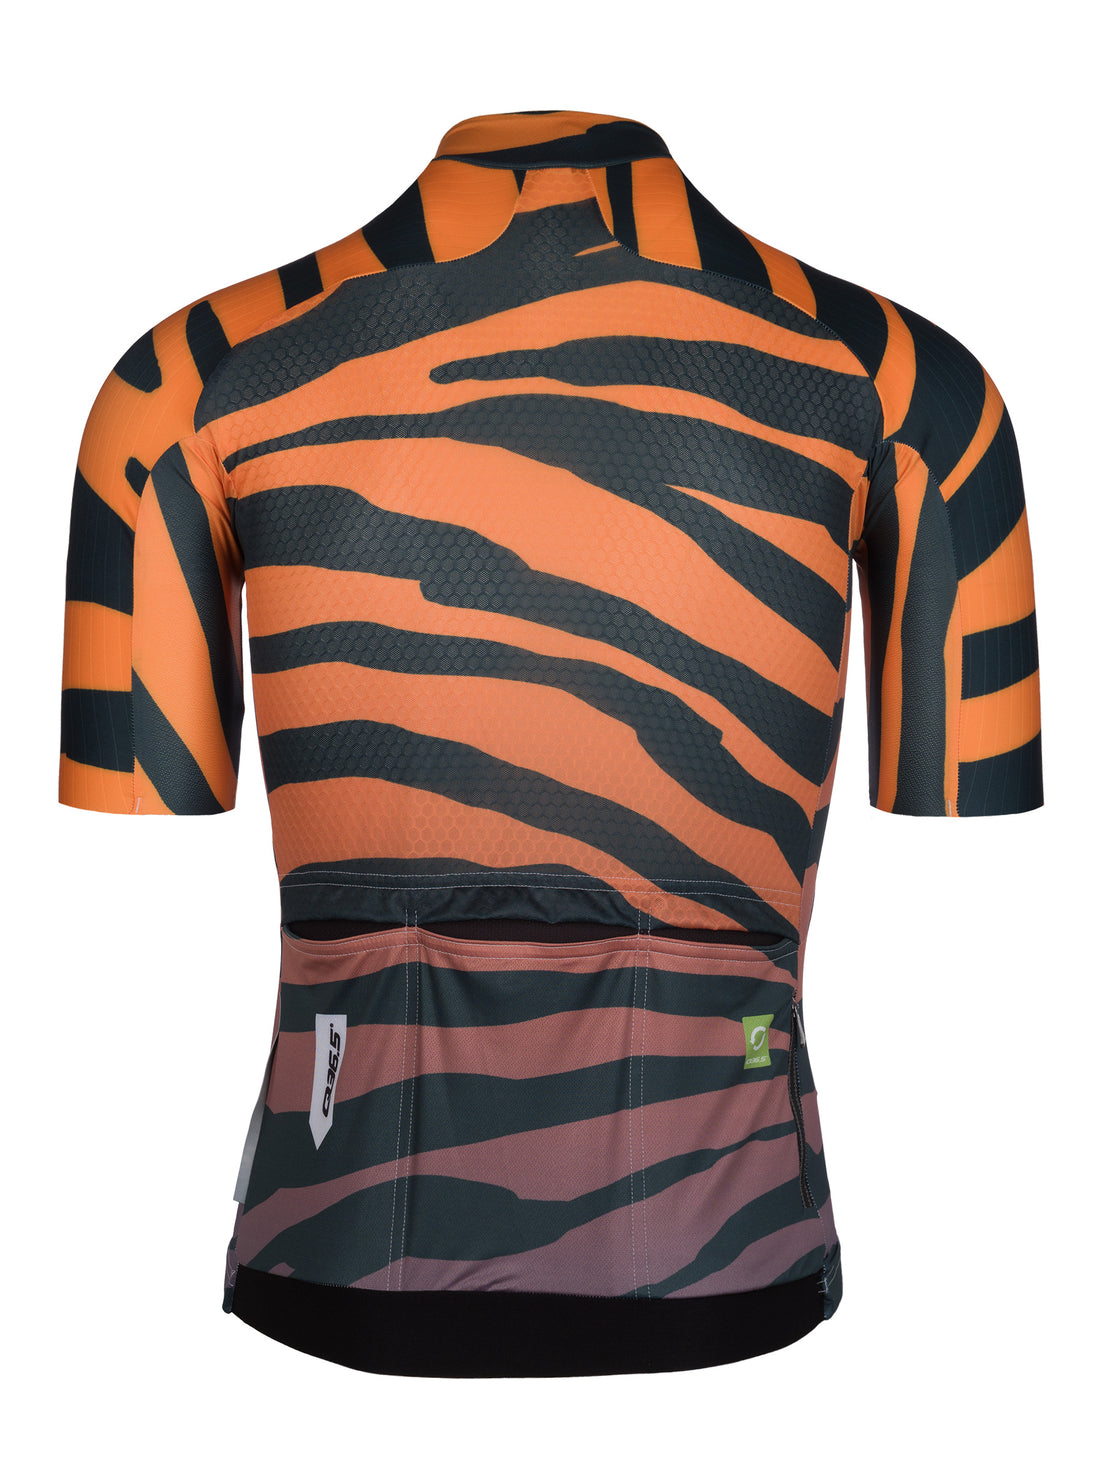 Maglia manica corta Q36.5 R2 Tiger Men Cycling Jersey arancione